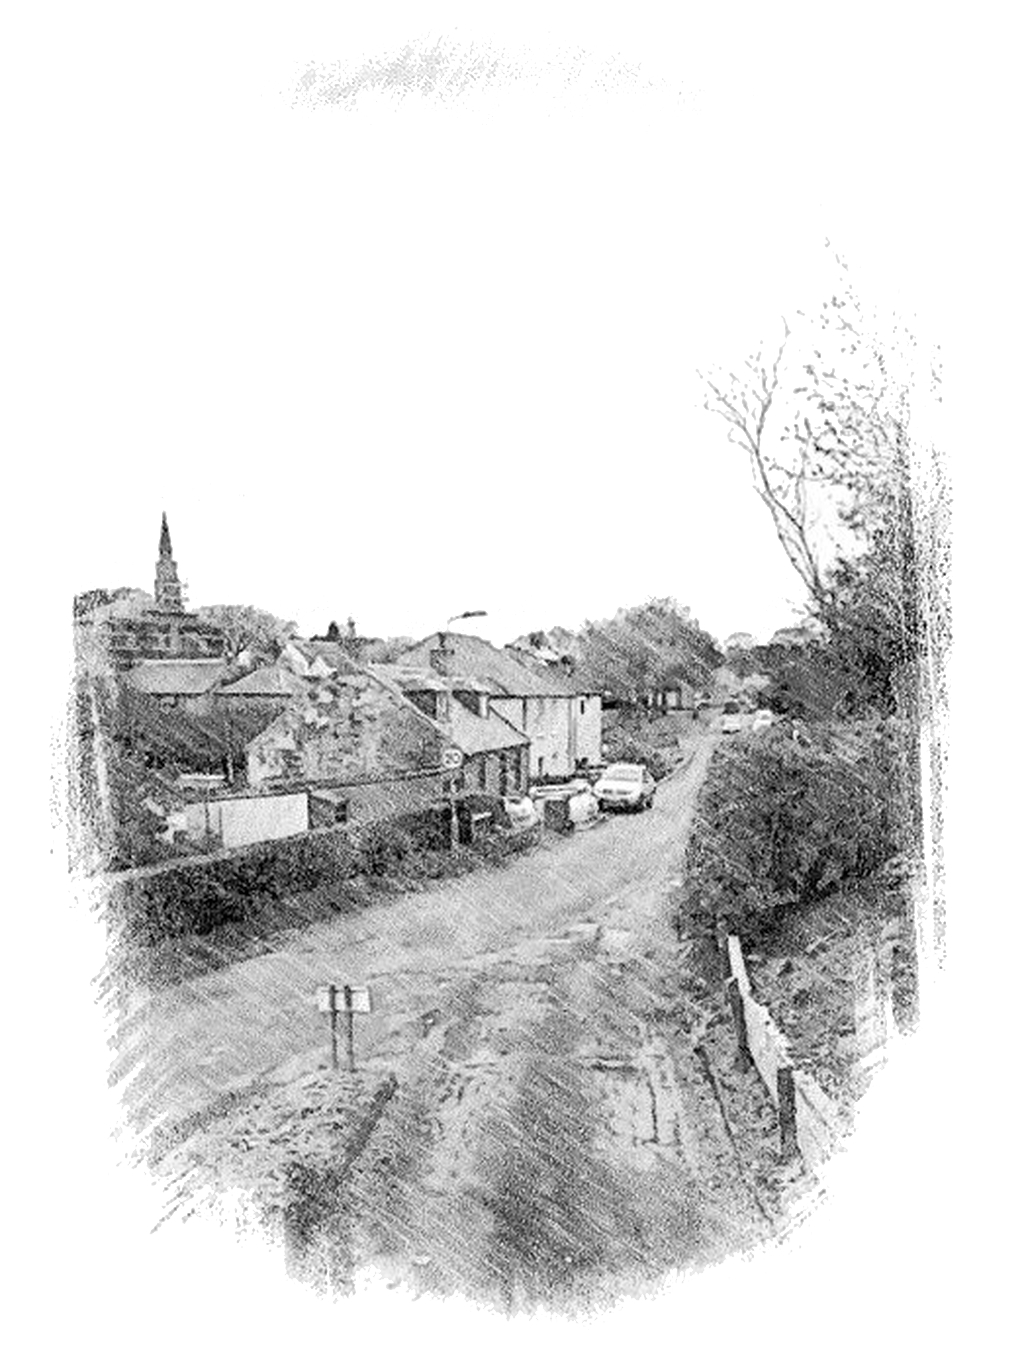 Hill Street - Composed by John C Grant (https://johncgrant.com). Traditional composer from Kilmarnock, Ayrshire, Scotland.